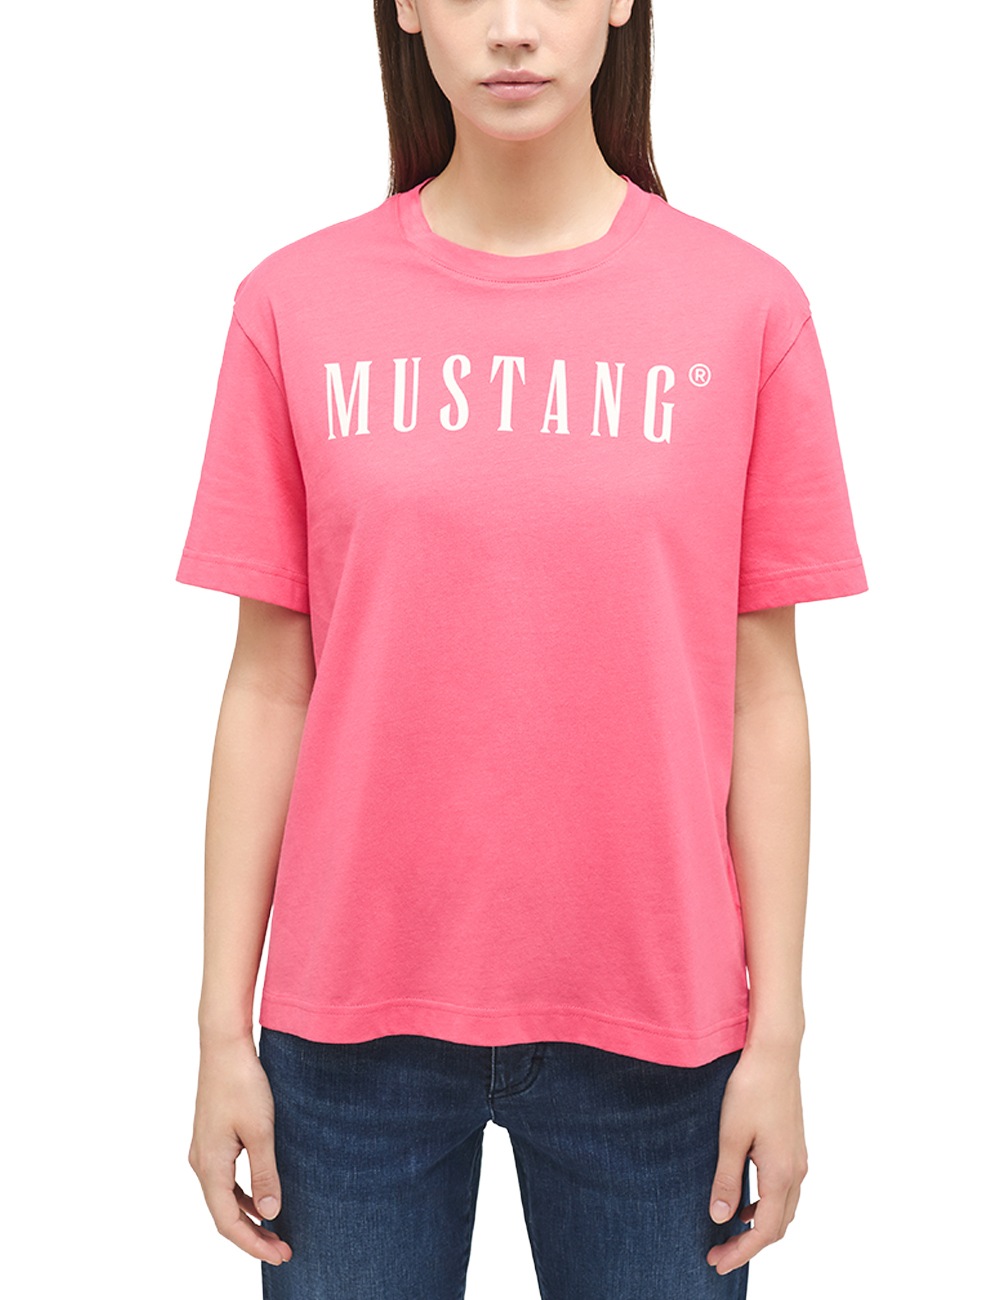 MUSTANG Kurzarmshirt T-Shirt shoppen »Mustang T-Shirt«